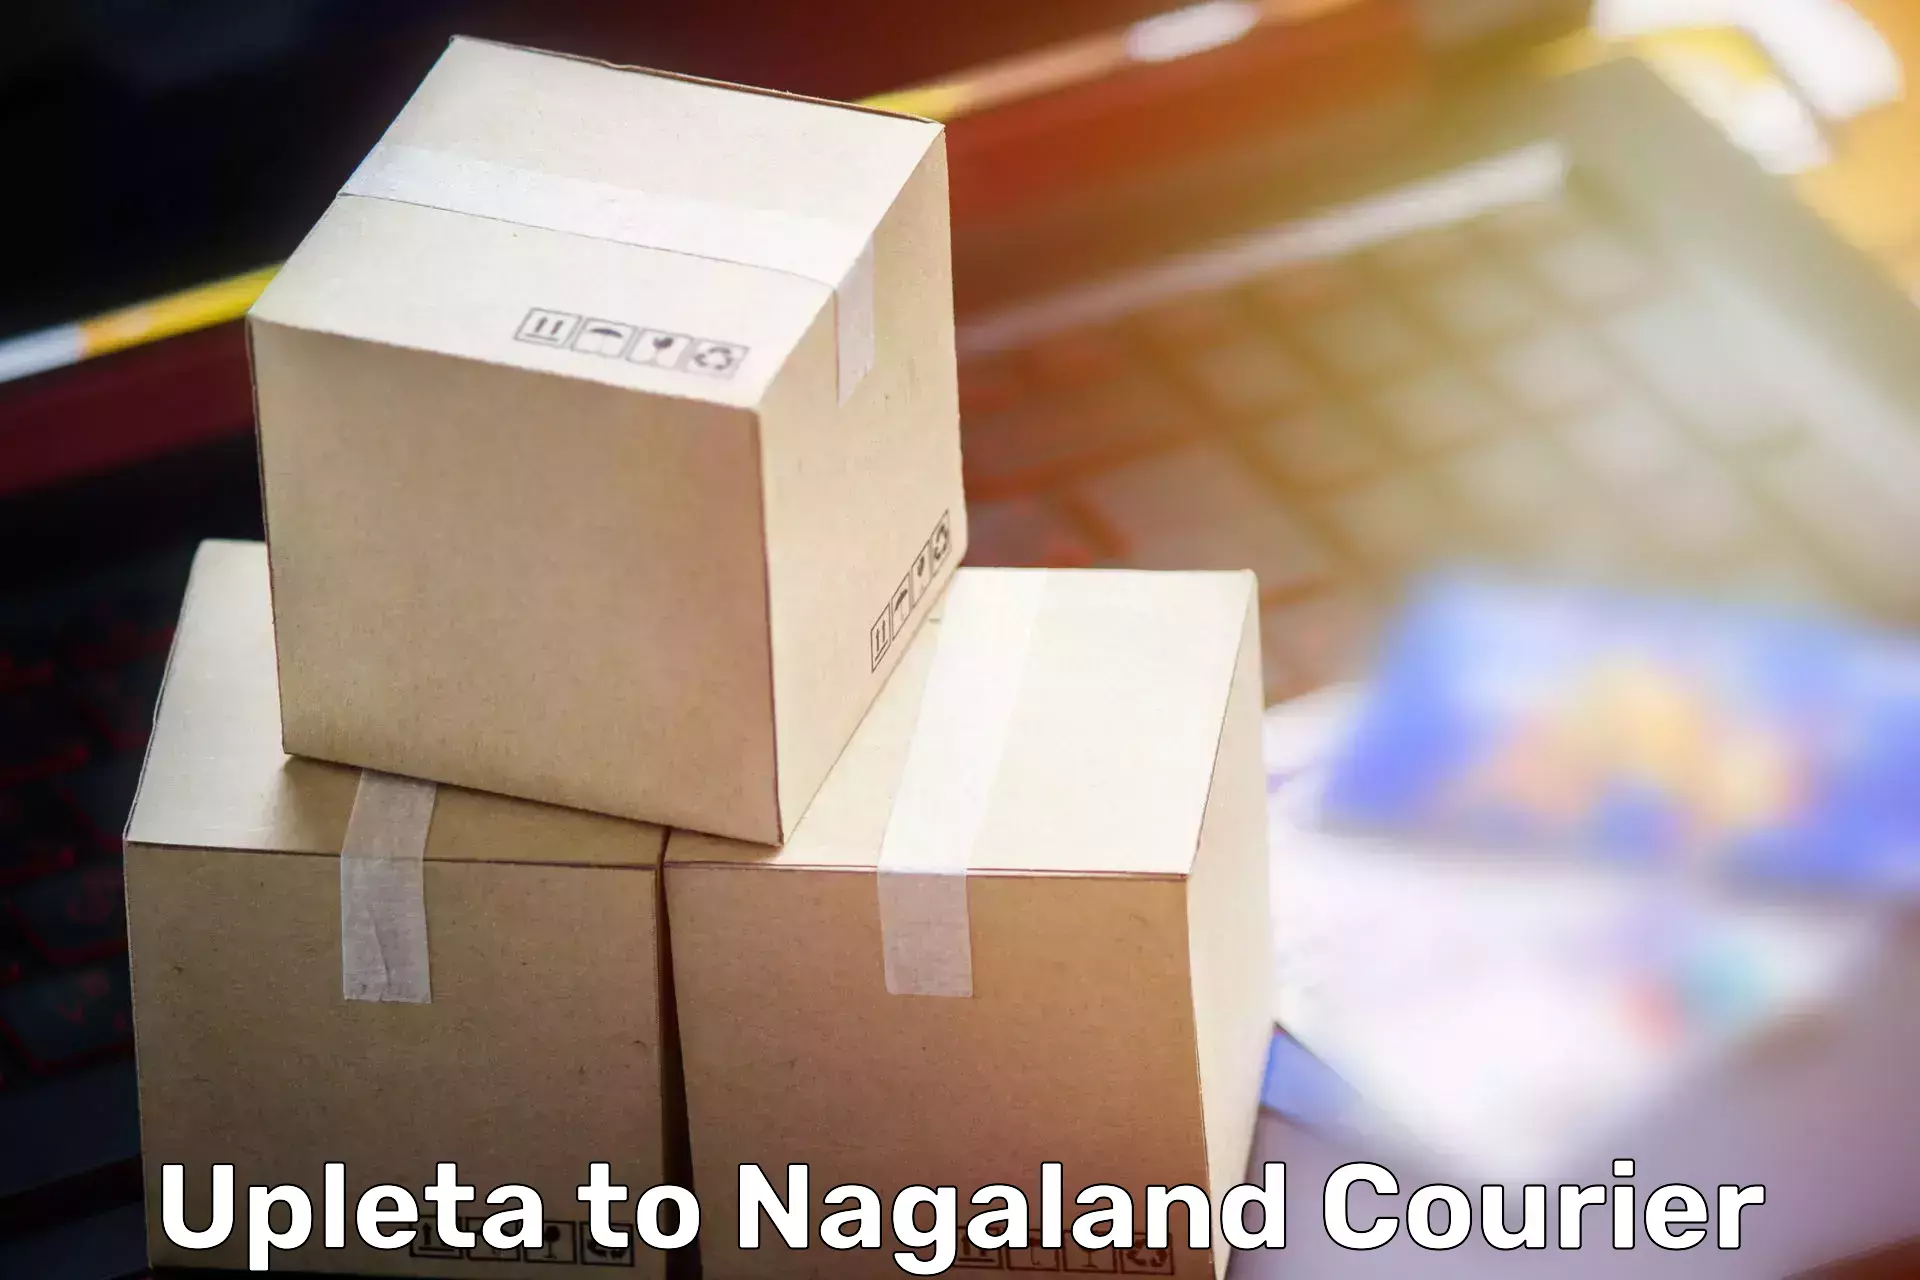 Nationwide household movers Upleta to Nagaland